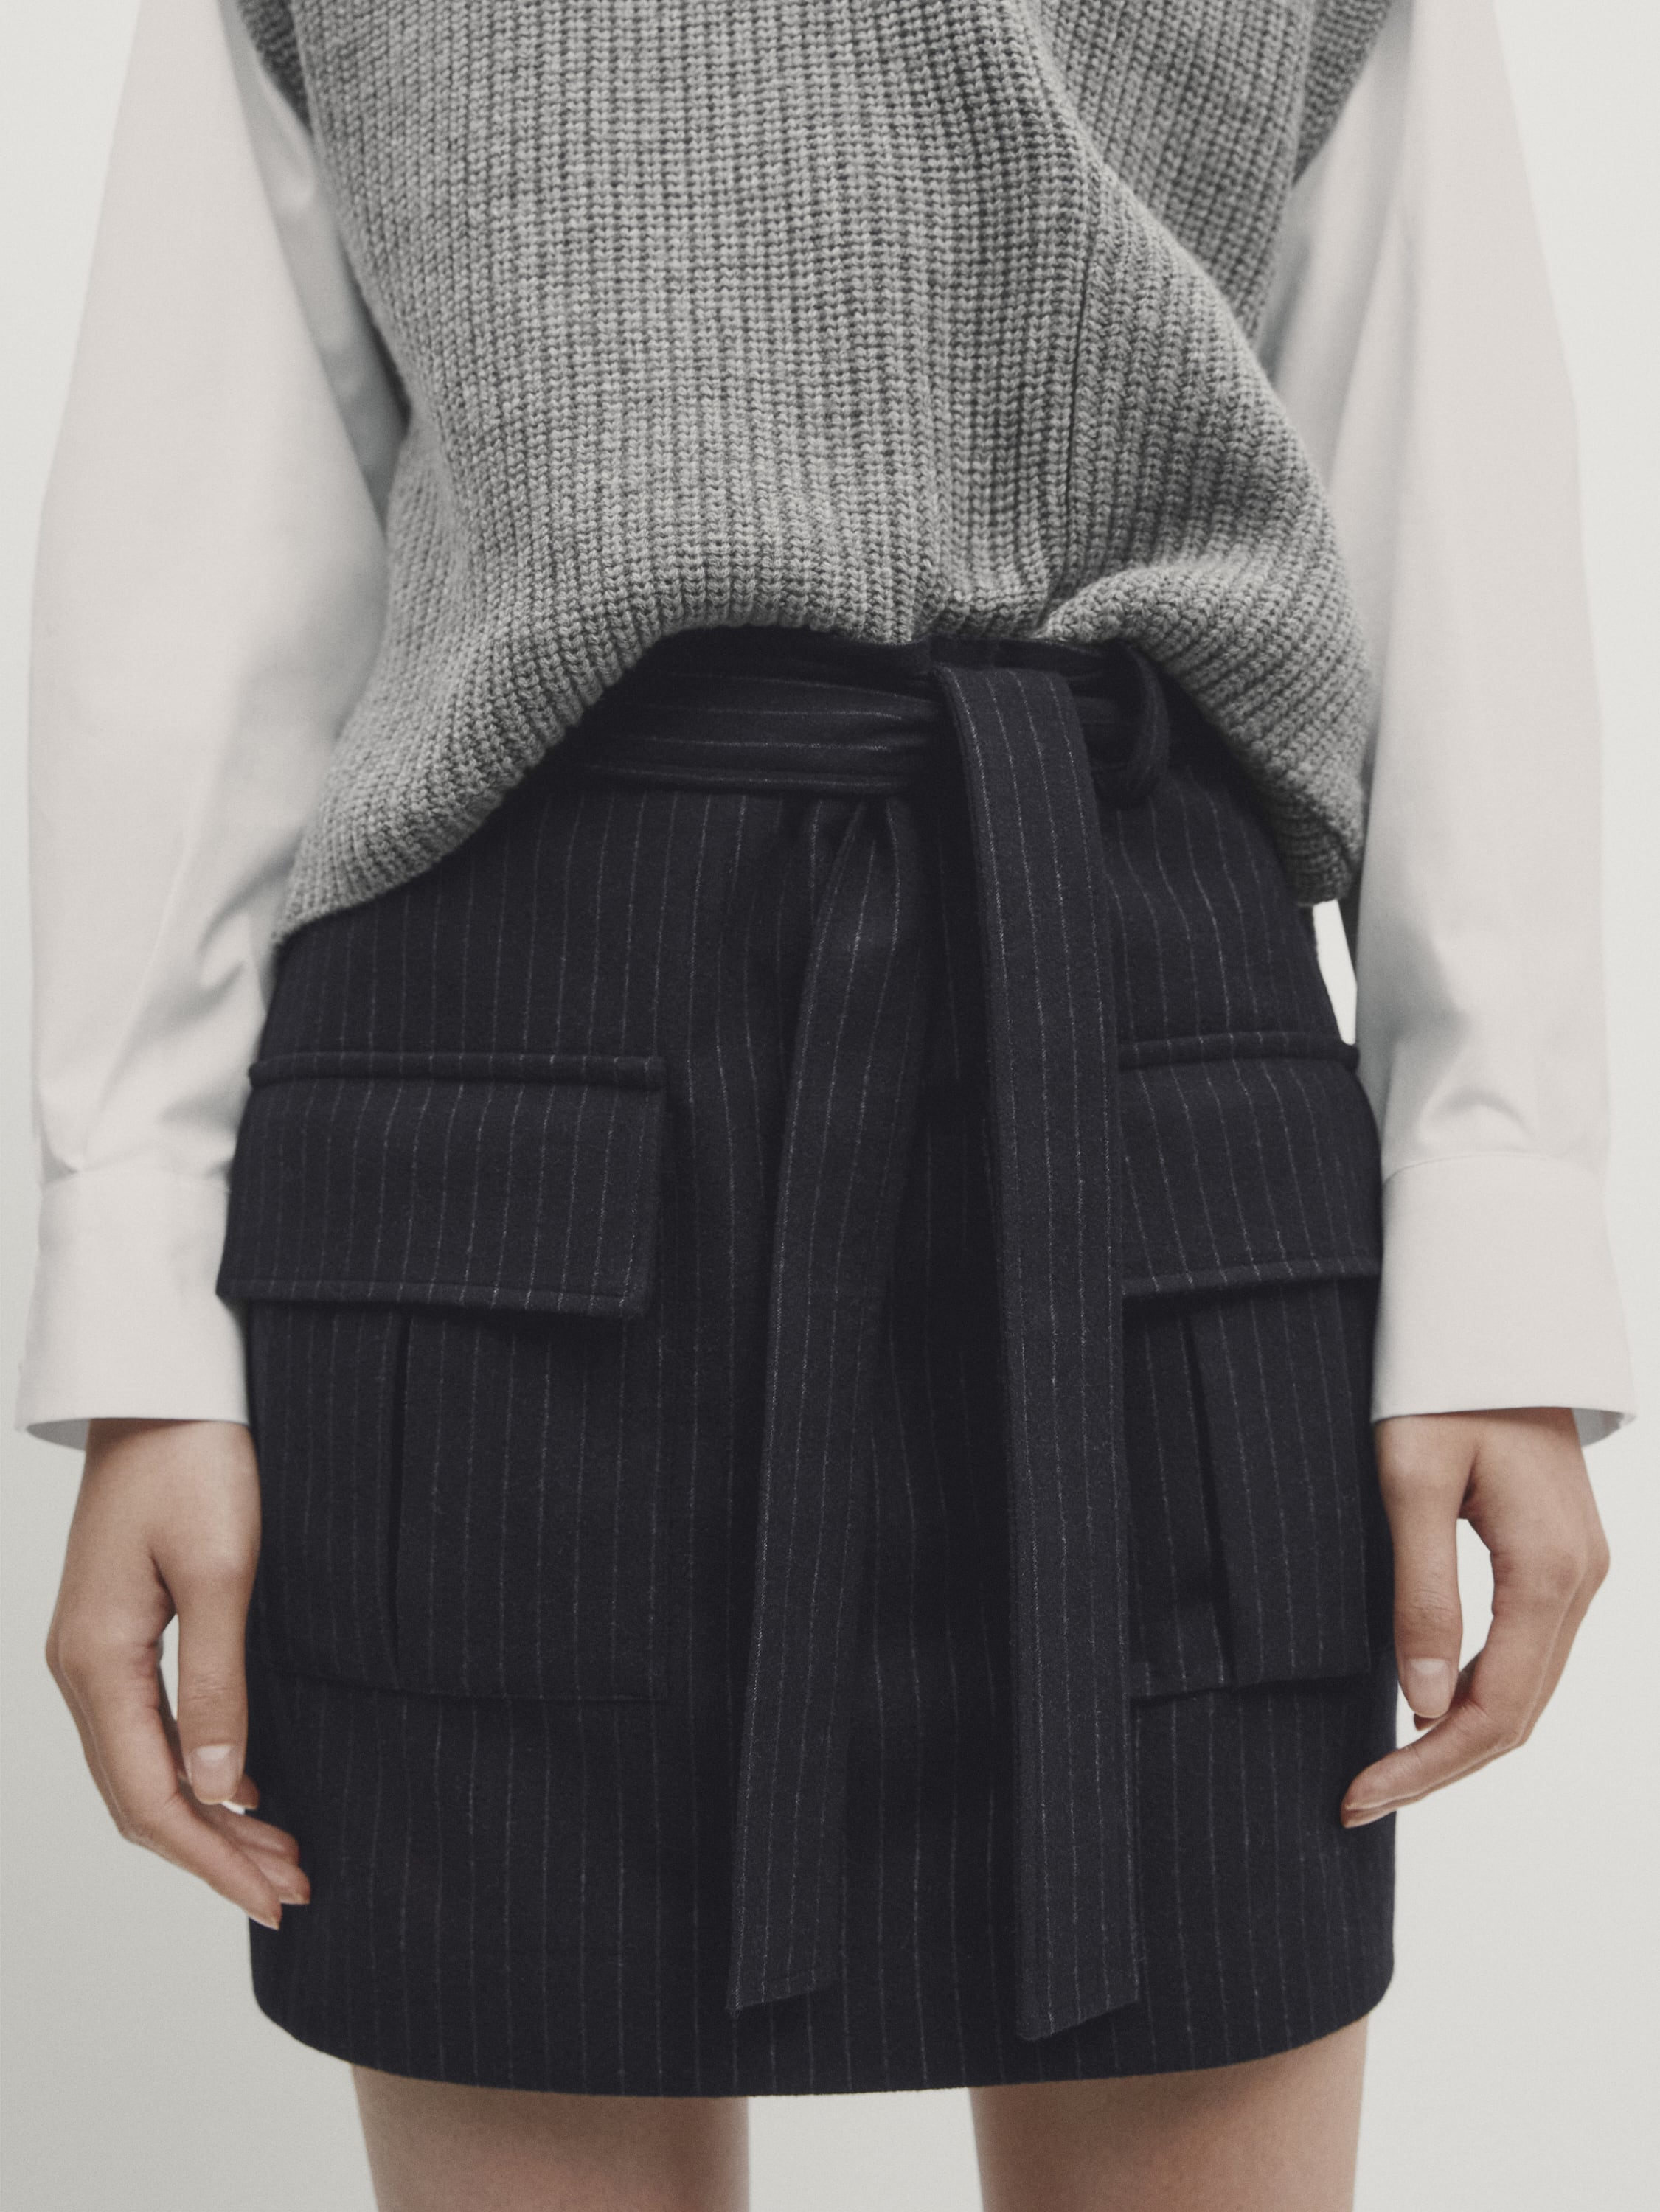 Pinstriped mini skirt with pockets - Studio